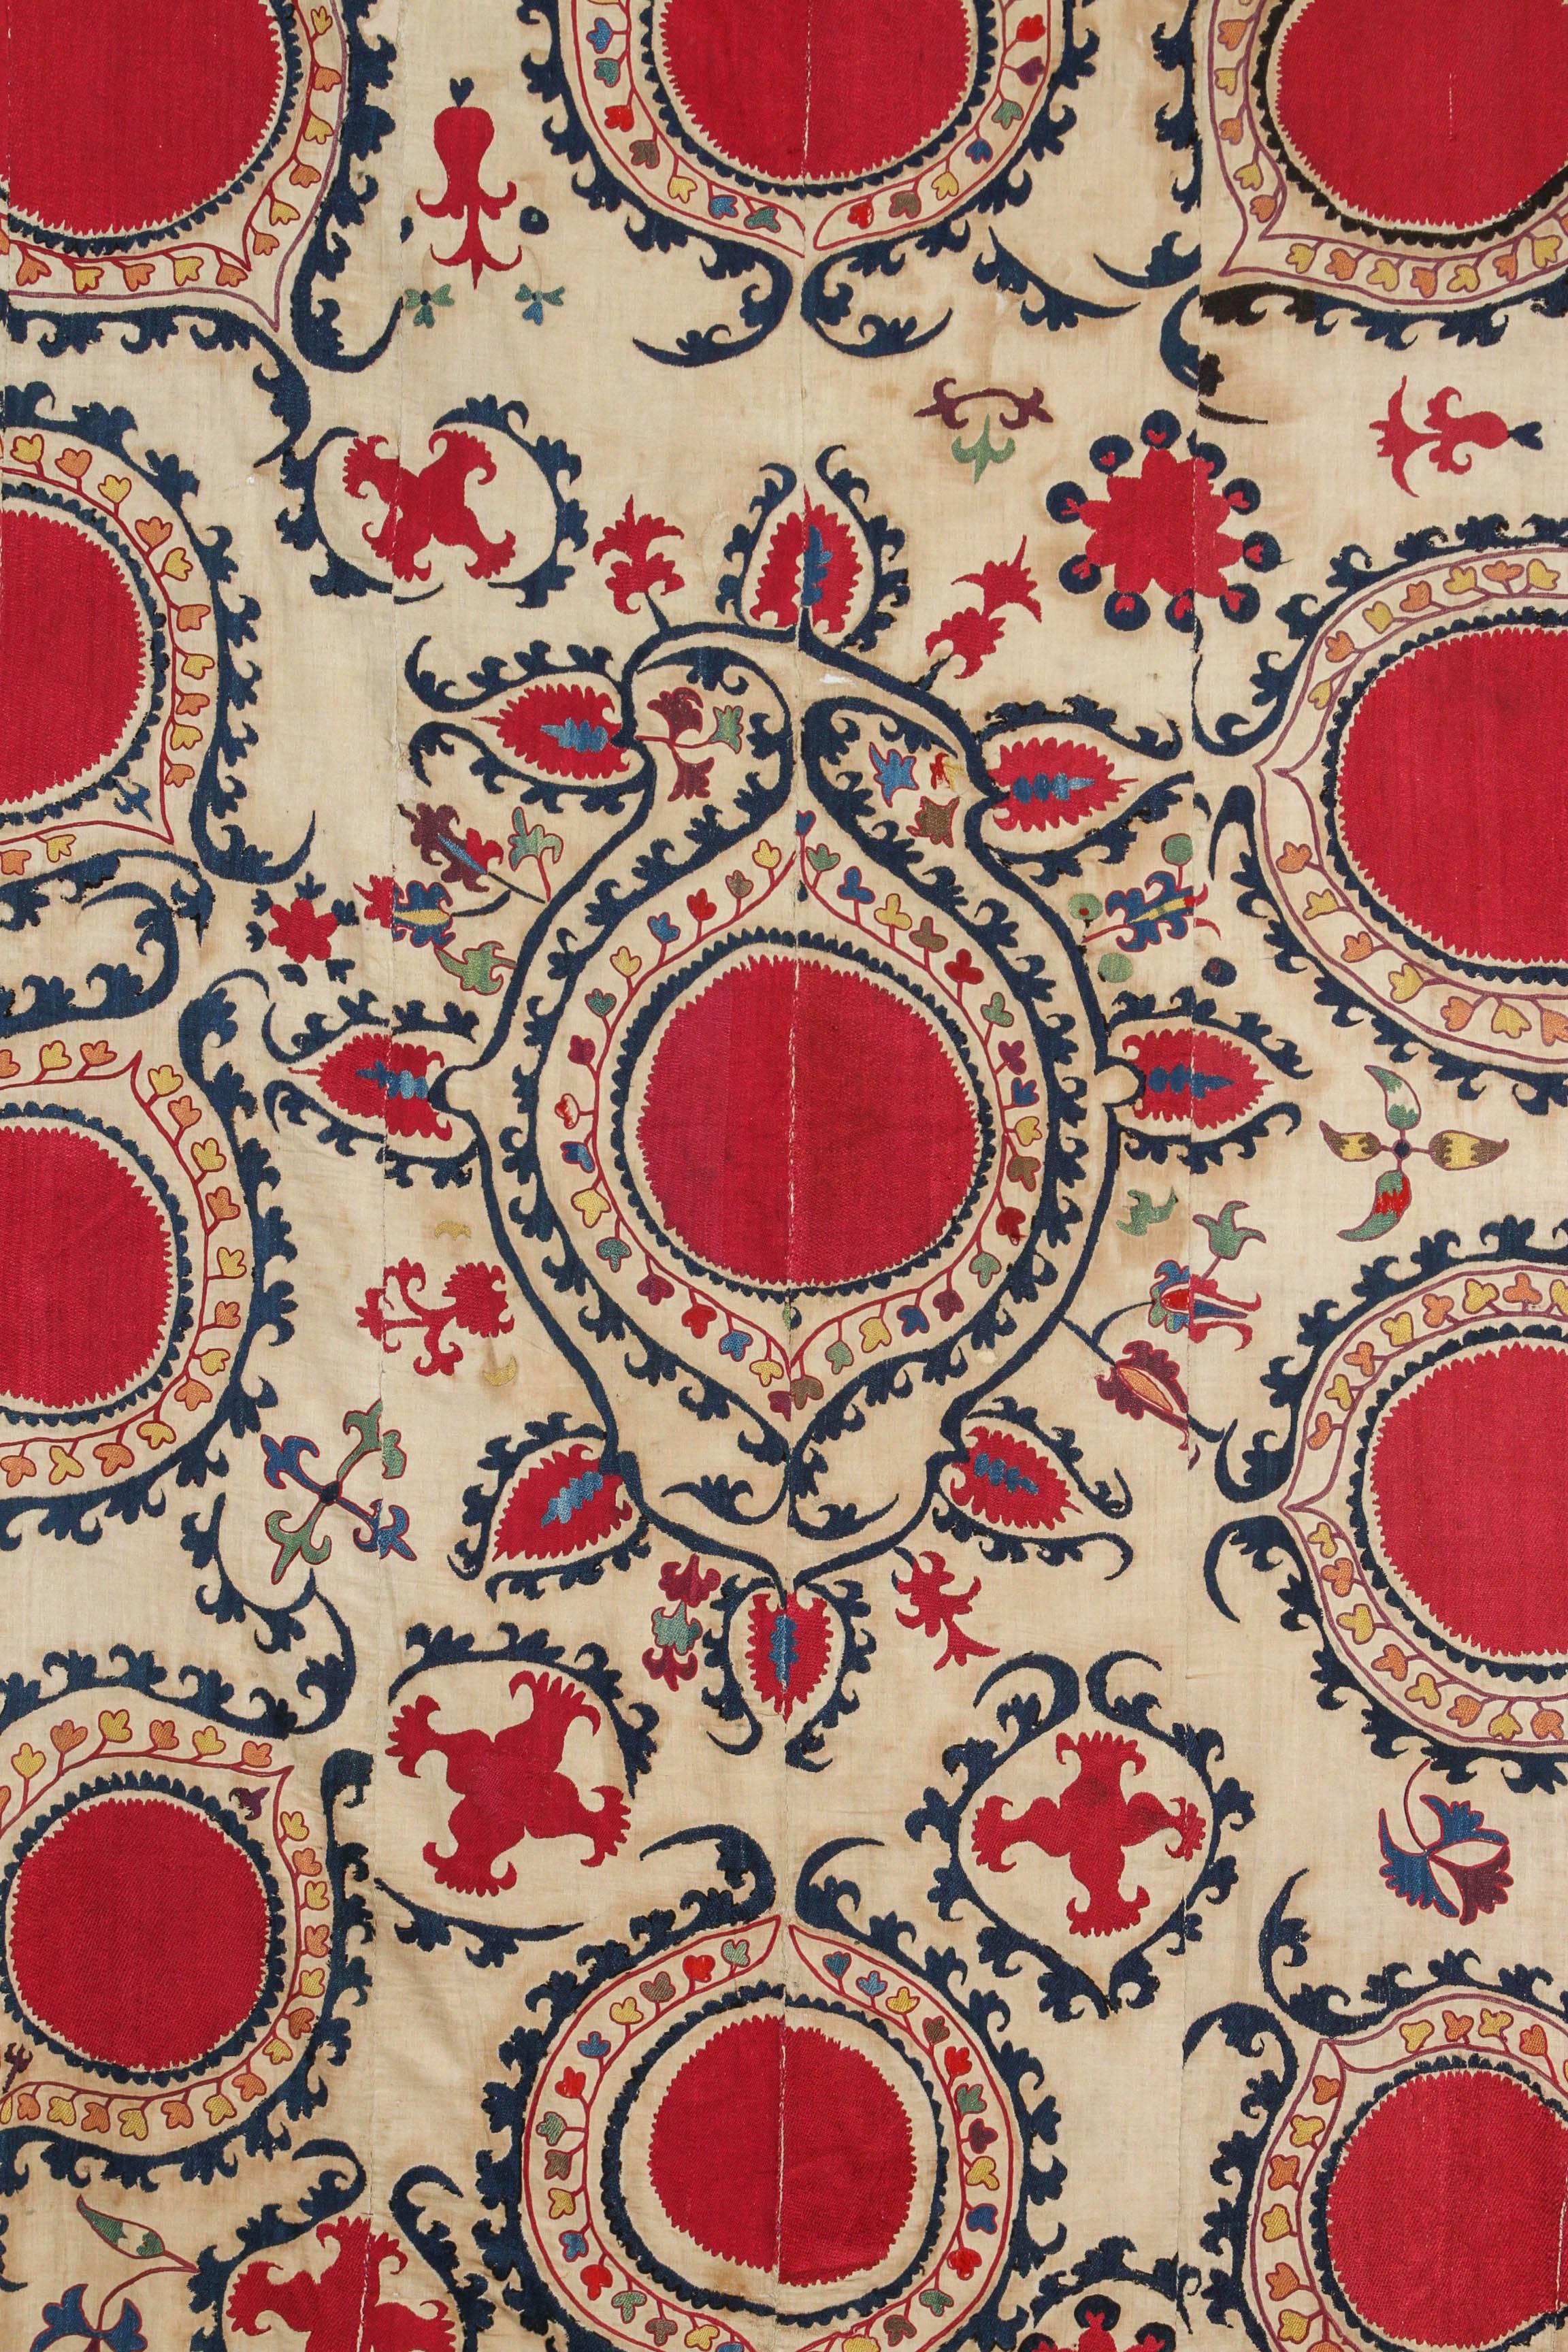 Uzbek Antique Uzbecki Samarkand Susani Textile Wall Hanging For Sale